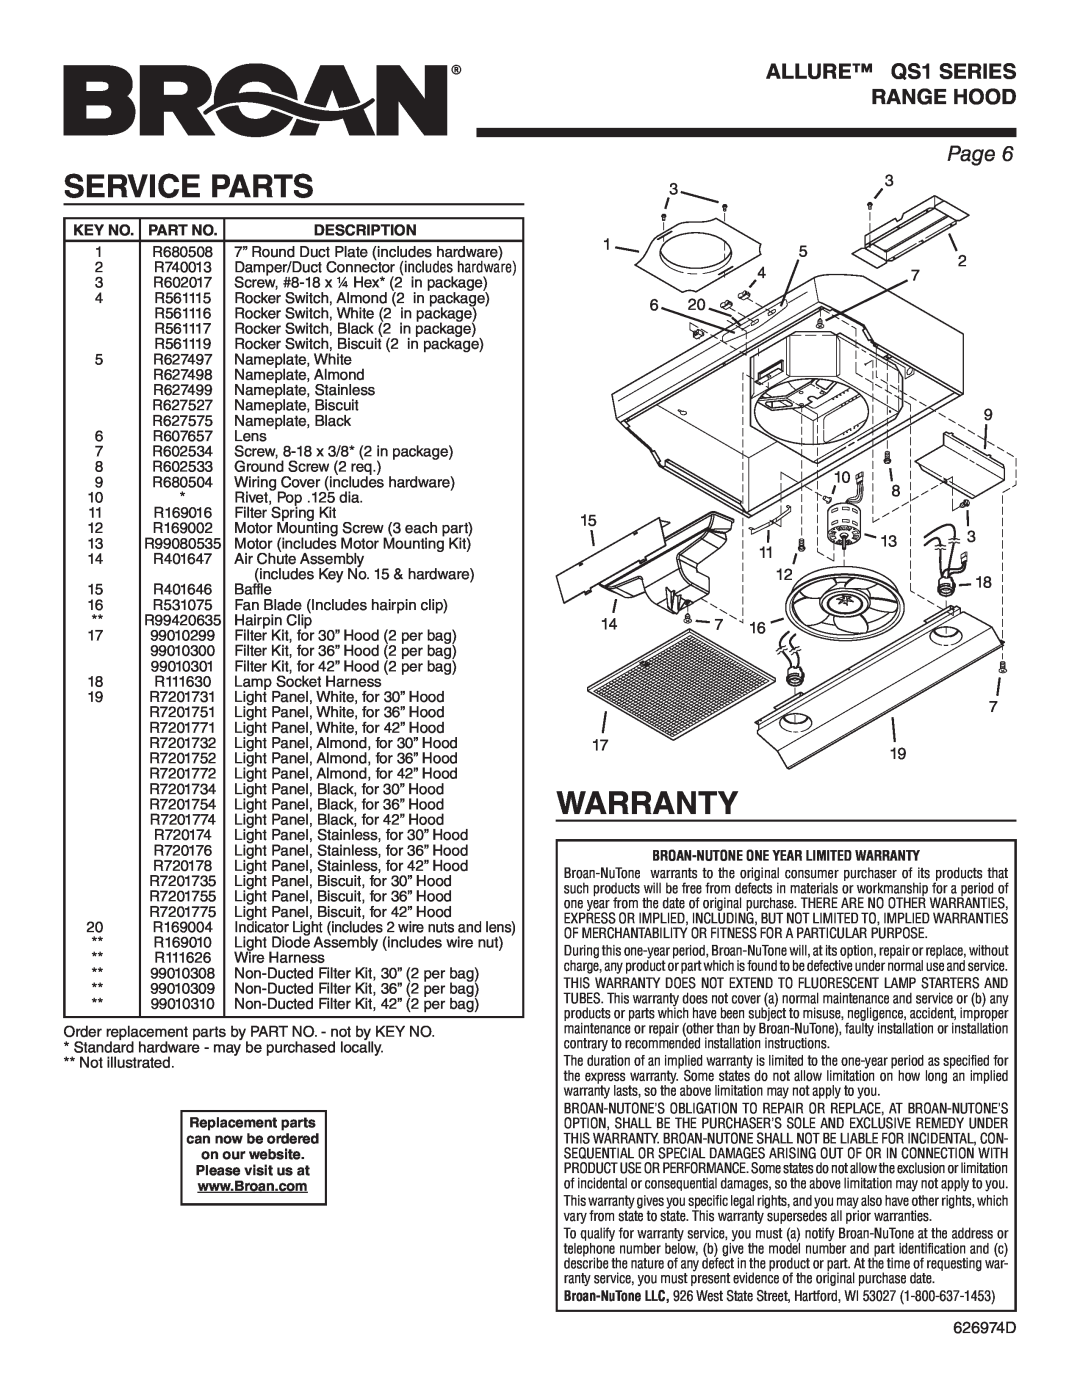 Broan QS136SS manual Service Parts, Warranty, ALLURE QS1 SERIES RANGE HOOD, Page 